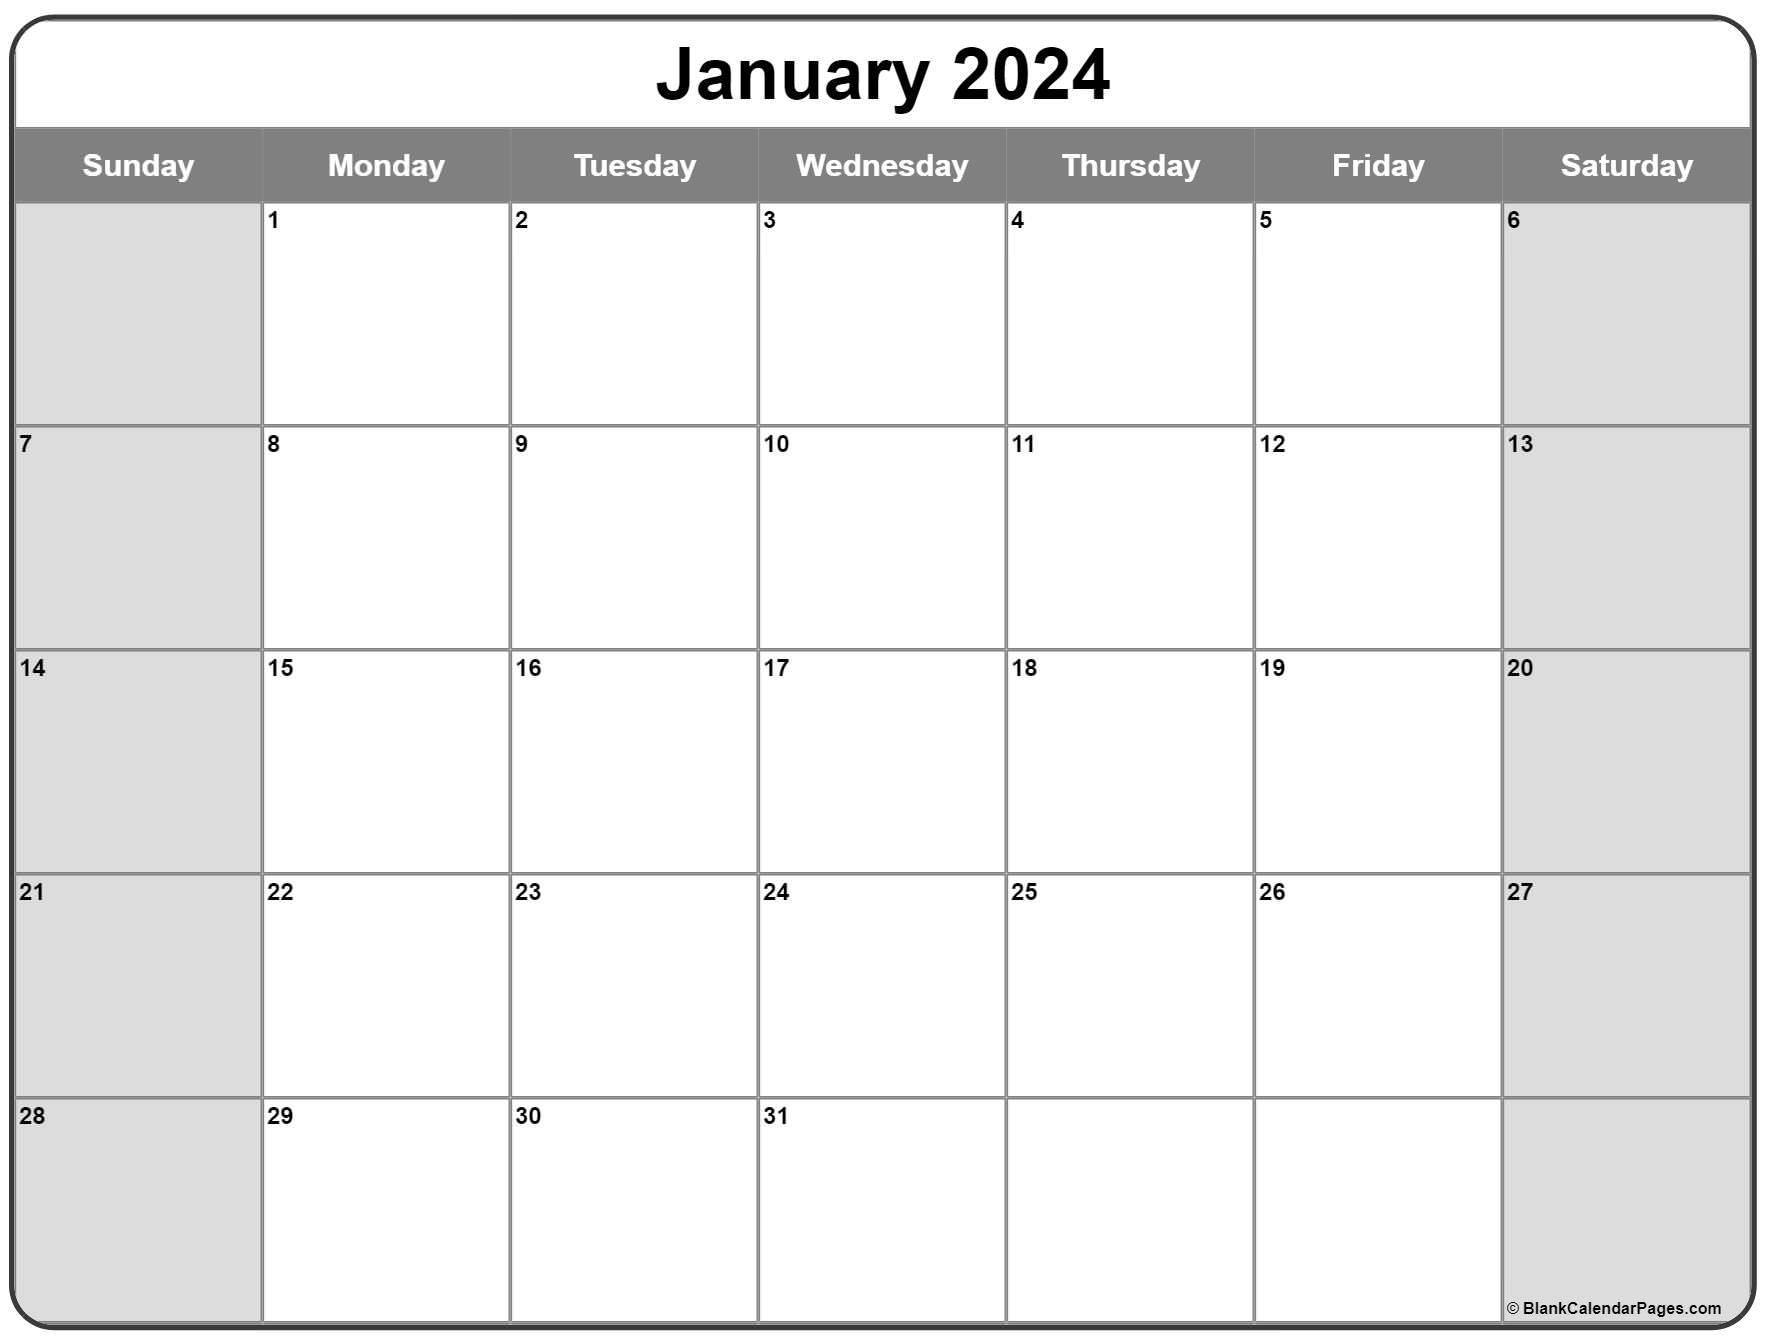 January 2024 calendar | free printable calendar